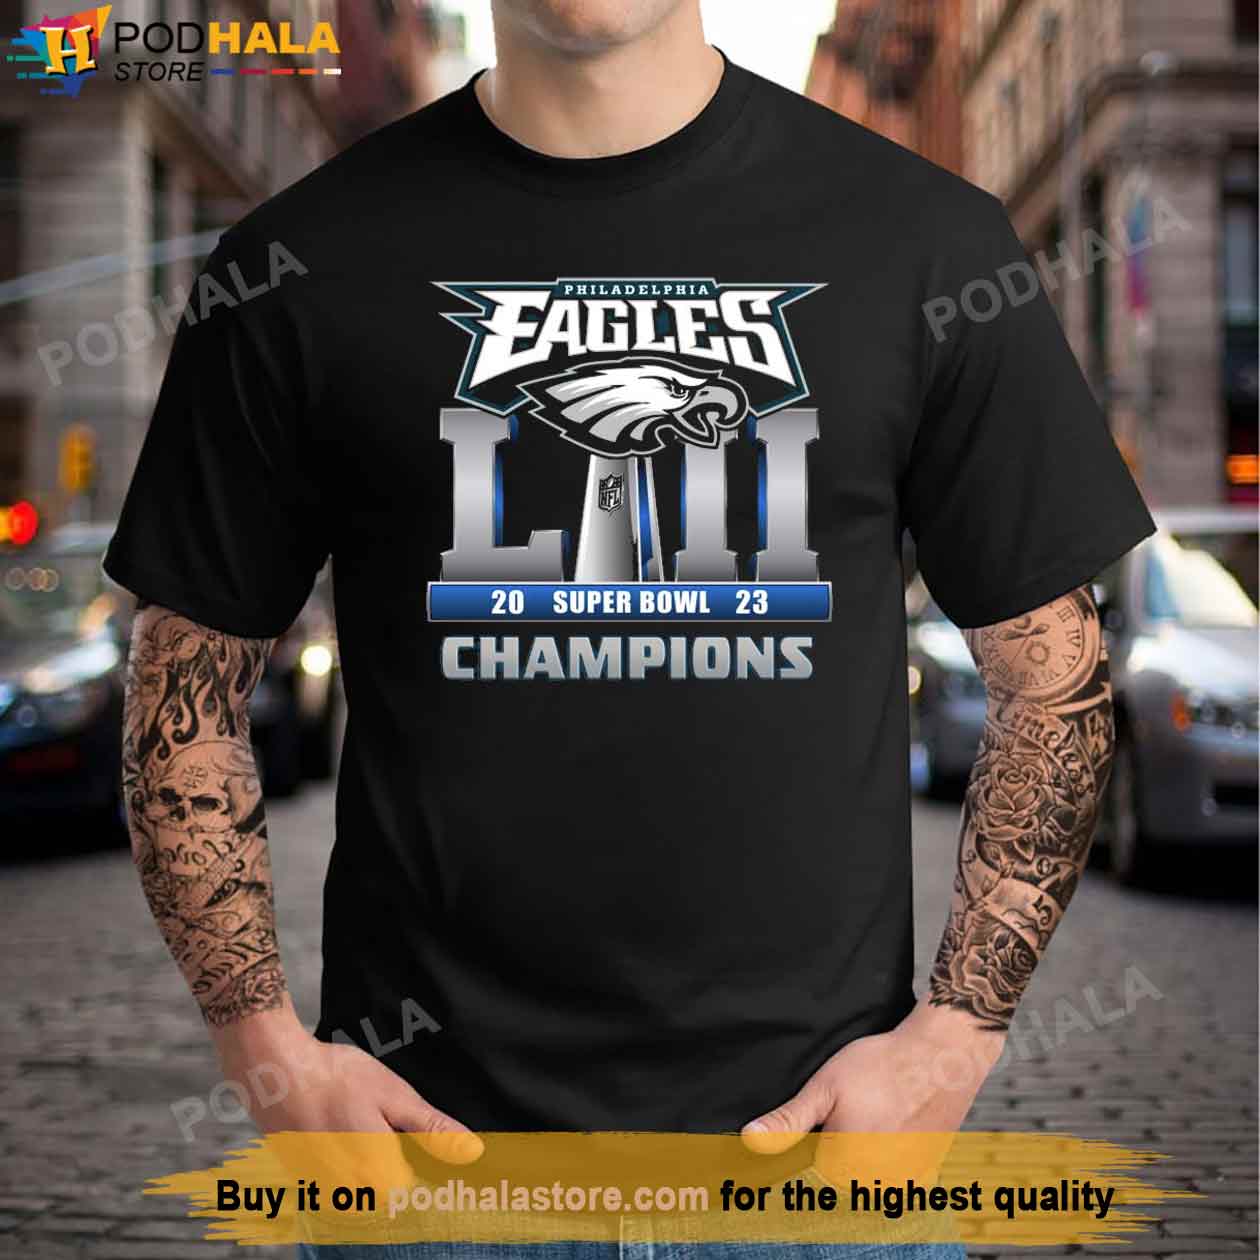 eagles super bowl champs shirt